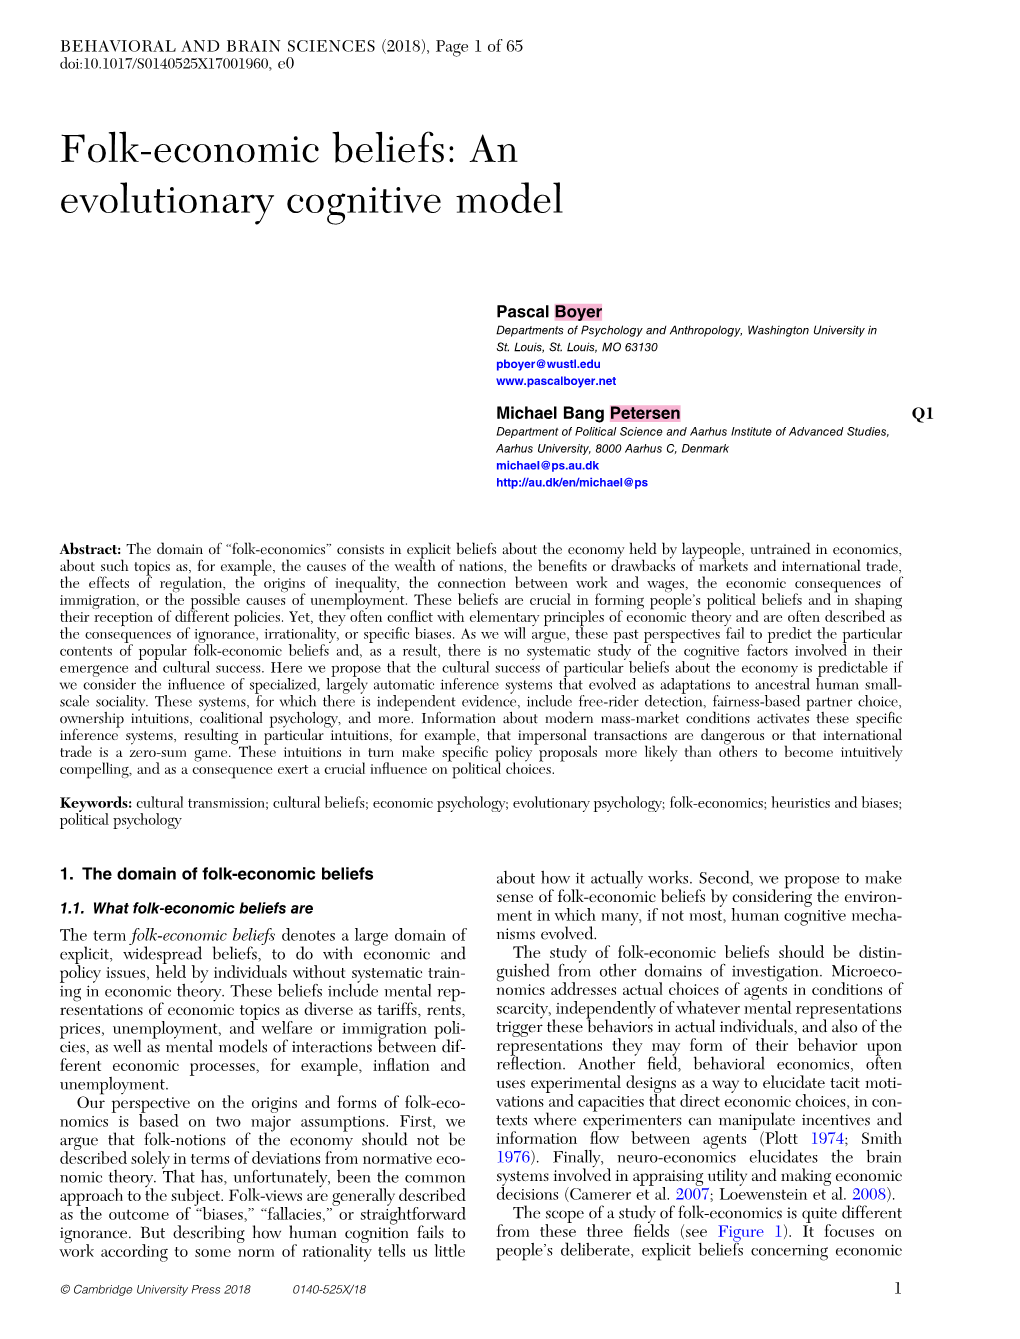 Folk-Economic Beliefs: an Evolutionary Cognitive Model